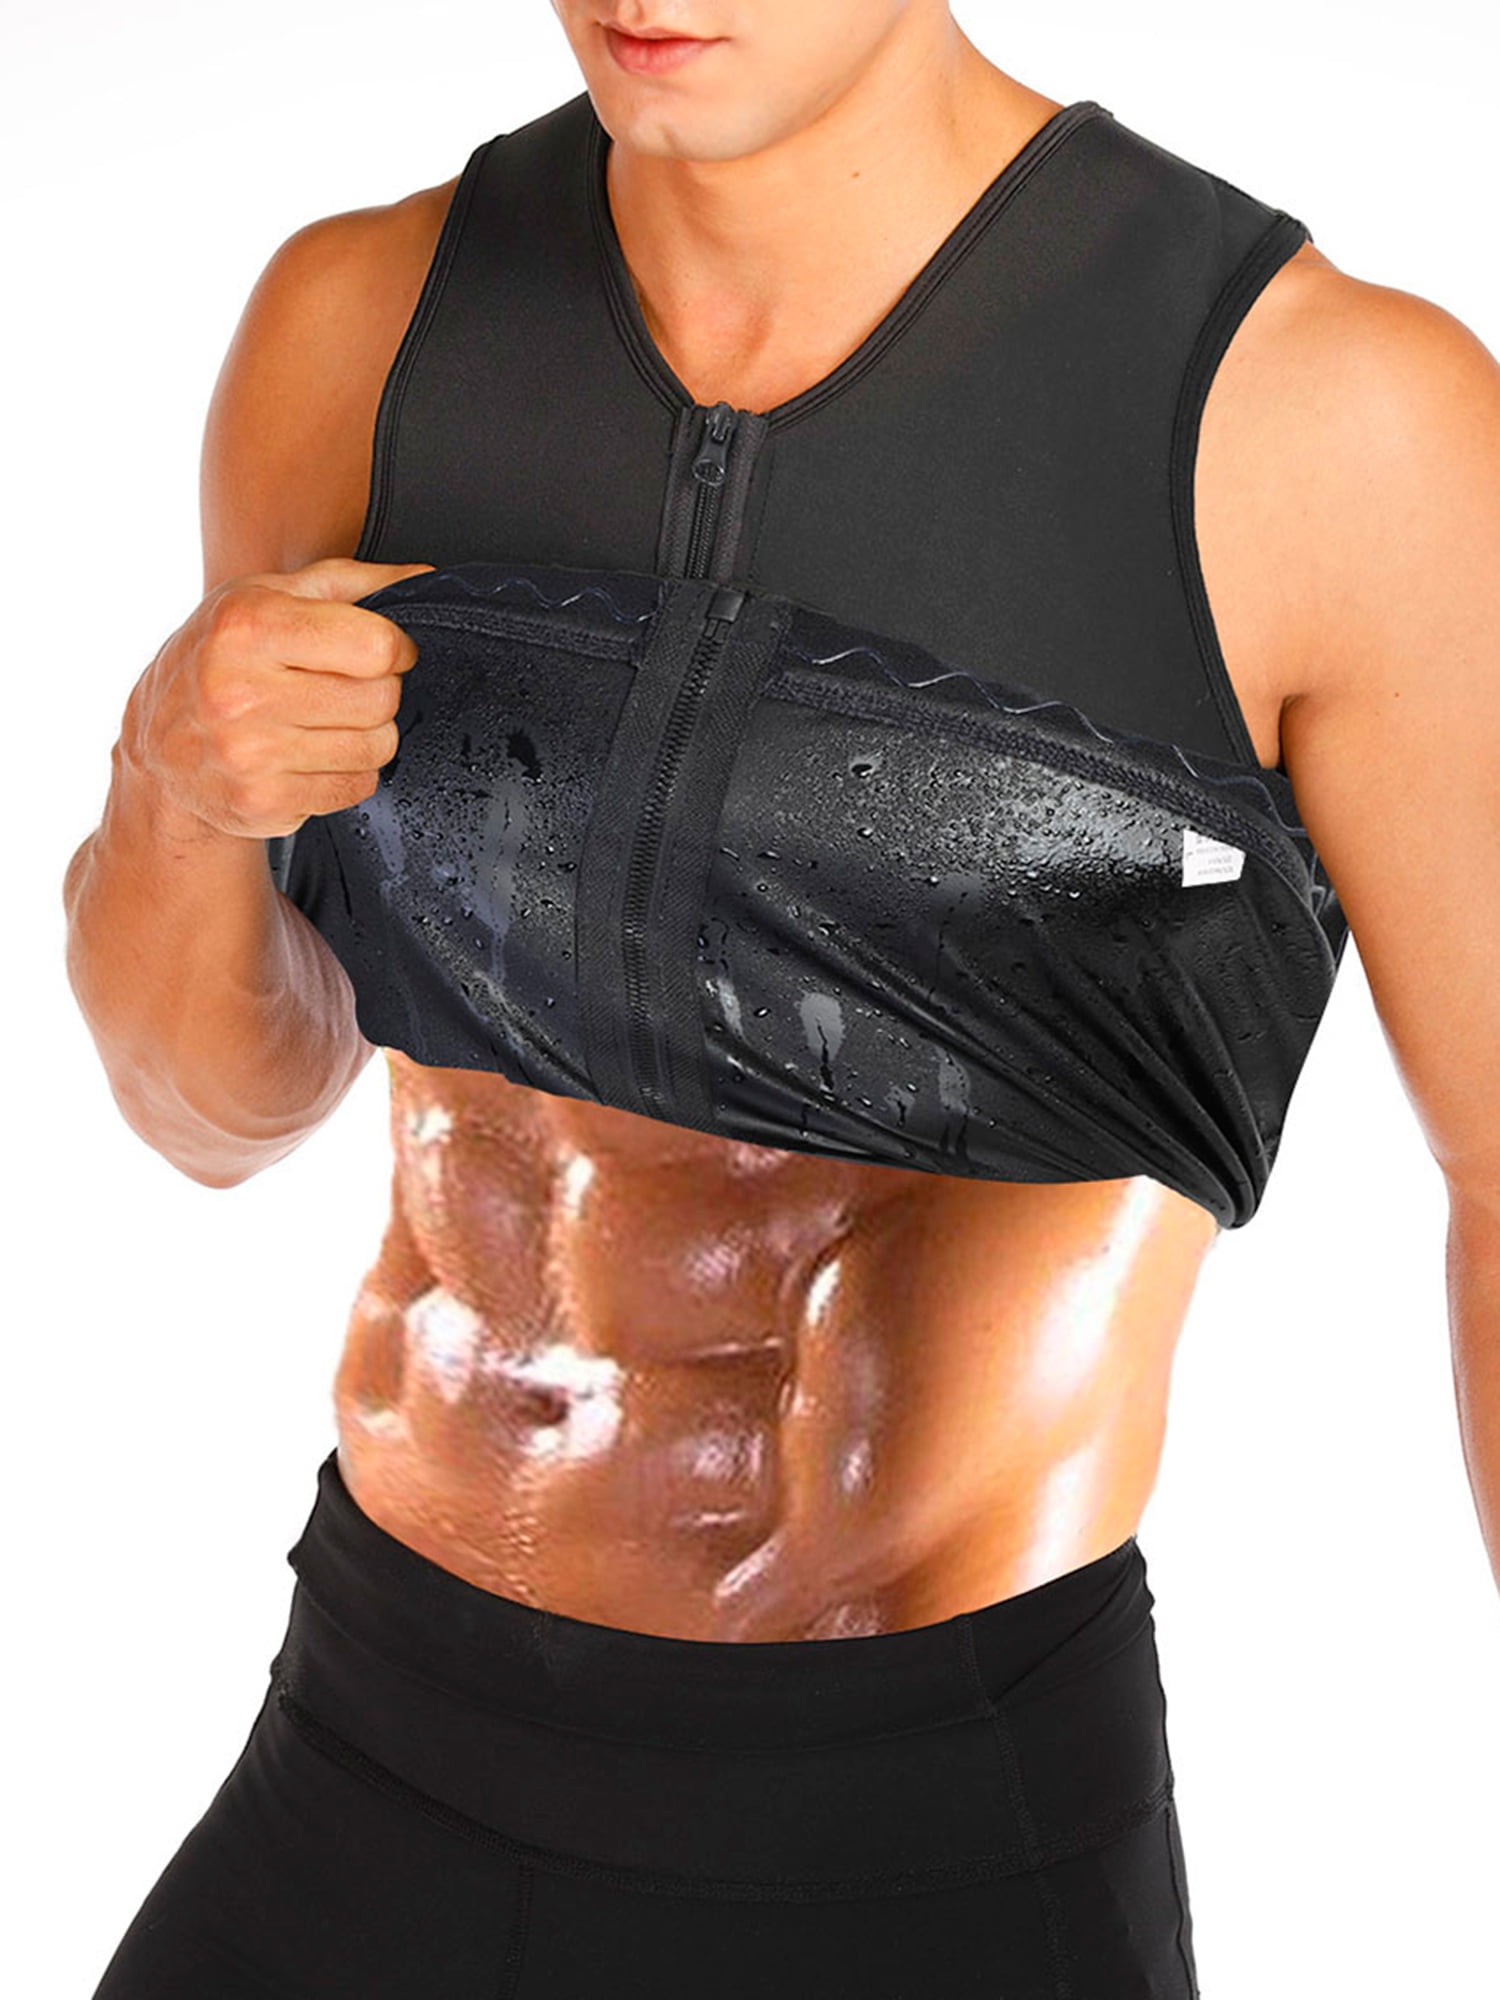 DBX Neoprene Sweat Shirt Rash Guard Sauna Suit Weight Loss Top MMA Tight Men 